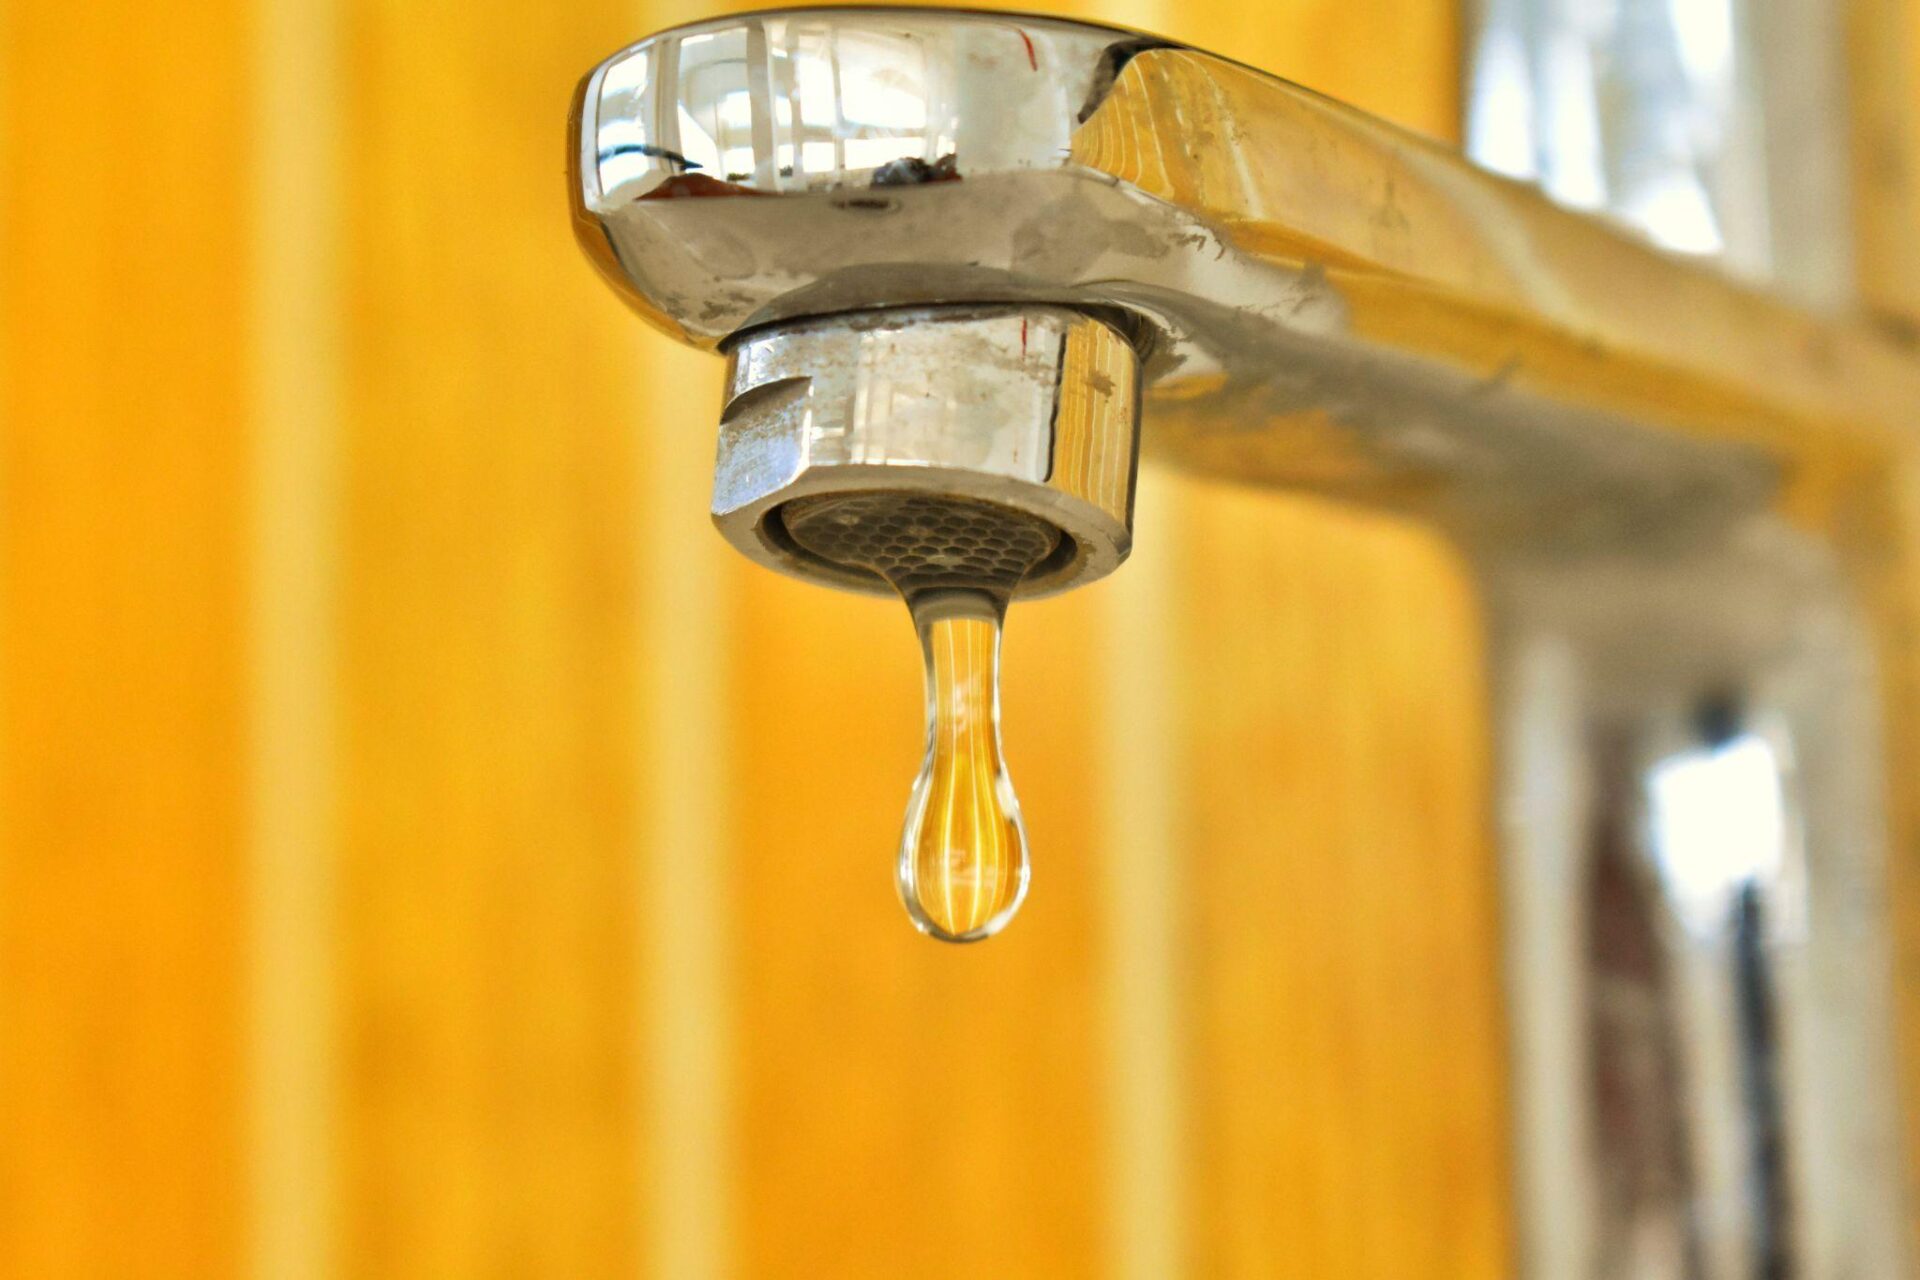 Be Proactive on Water Leaks